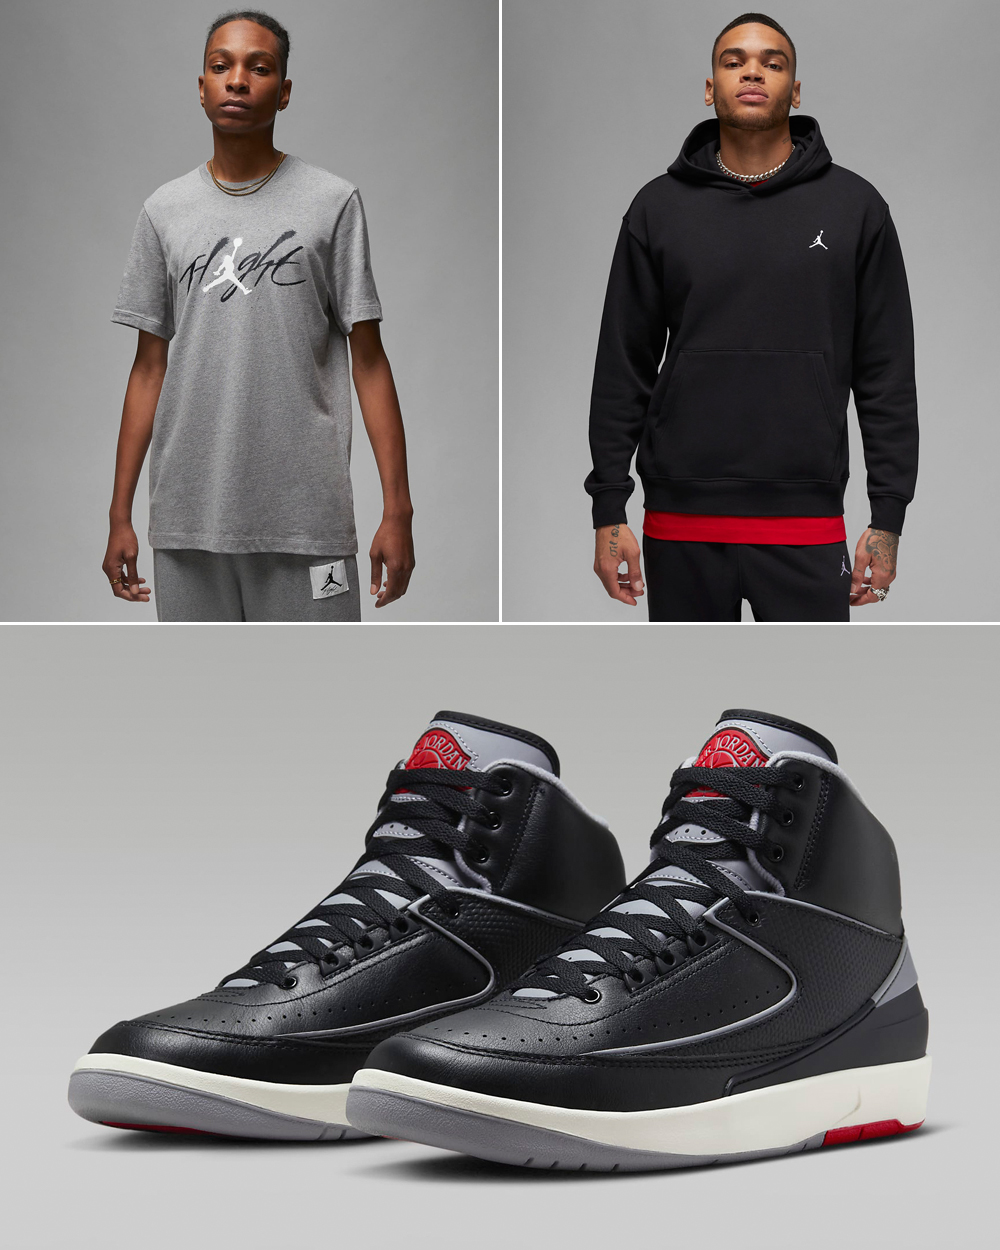 Air-Jordan-2-Black-Cement-Outfits